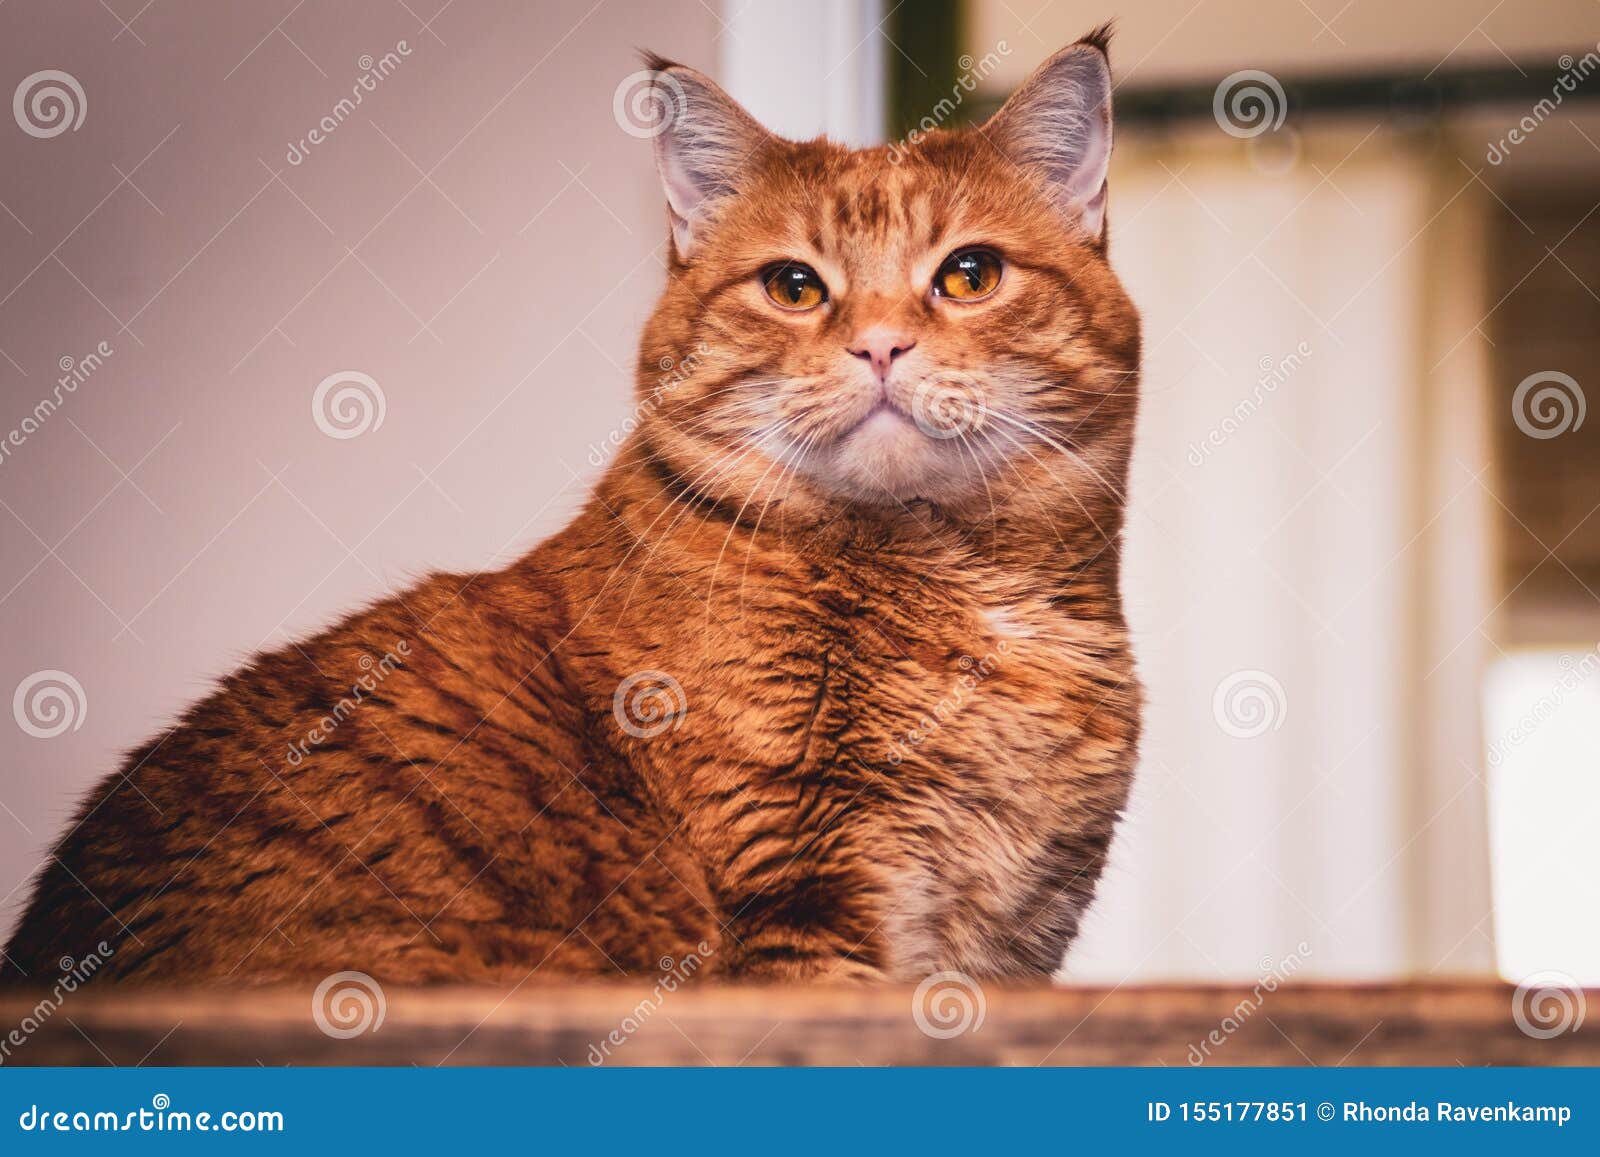 chubby orange cat